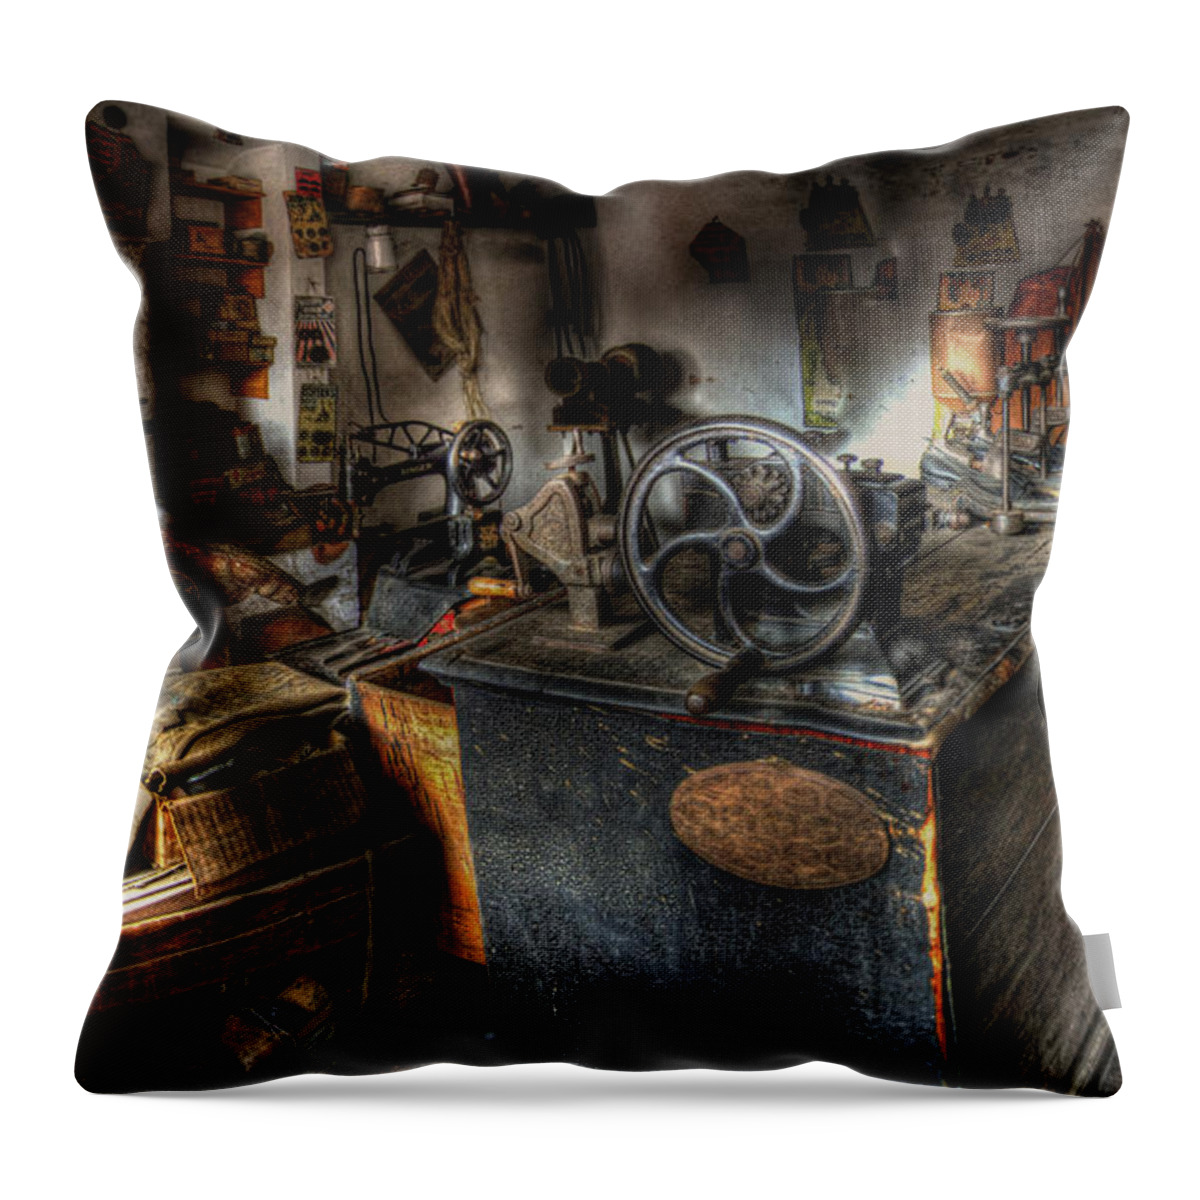 Art Throw Pillow featuring the photograph Cobbler's Shop by Yhun Suarez